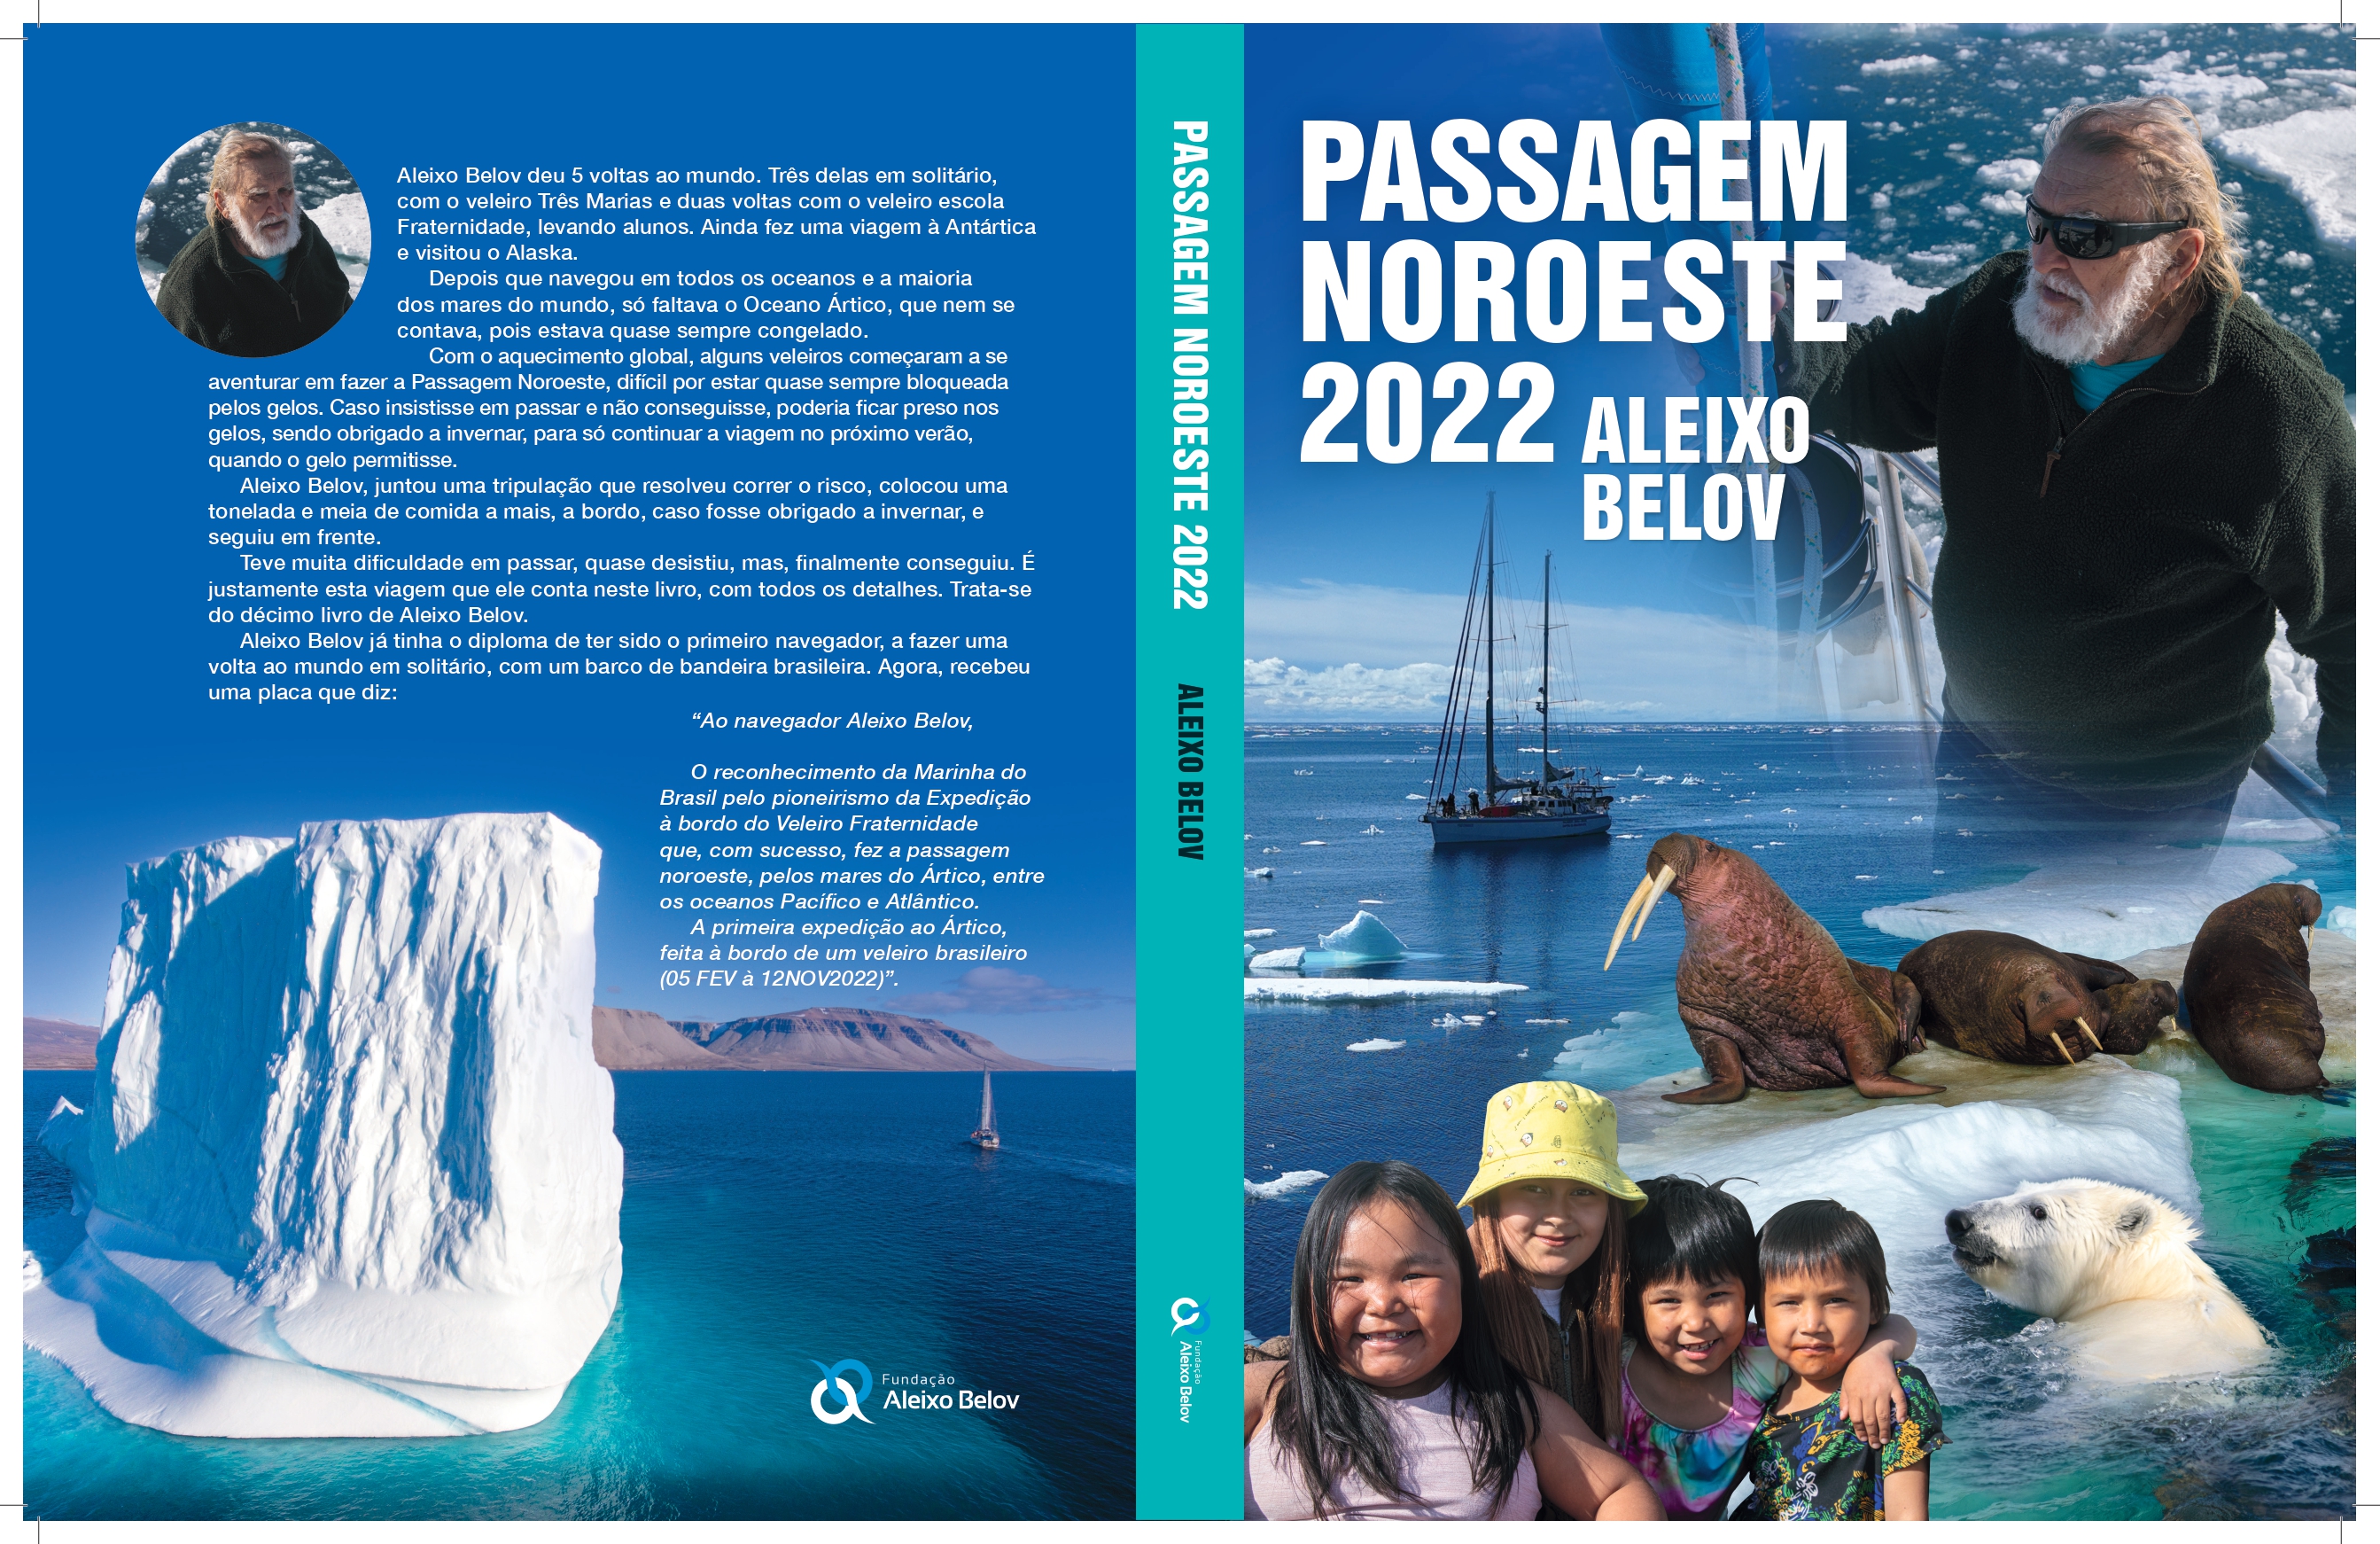 Passagem Noroeste 2022